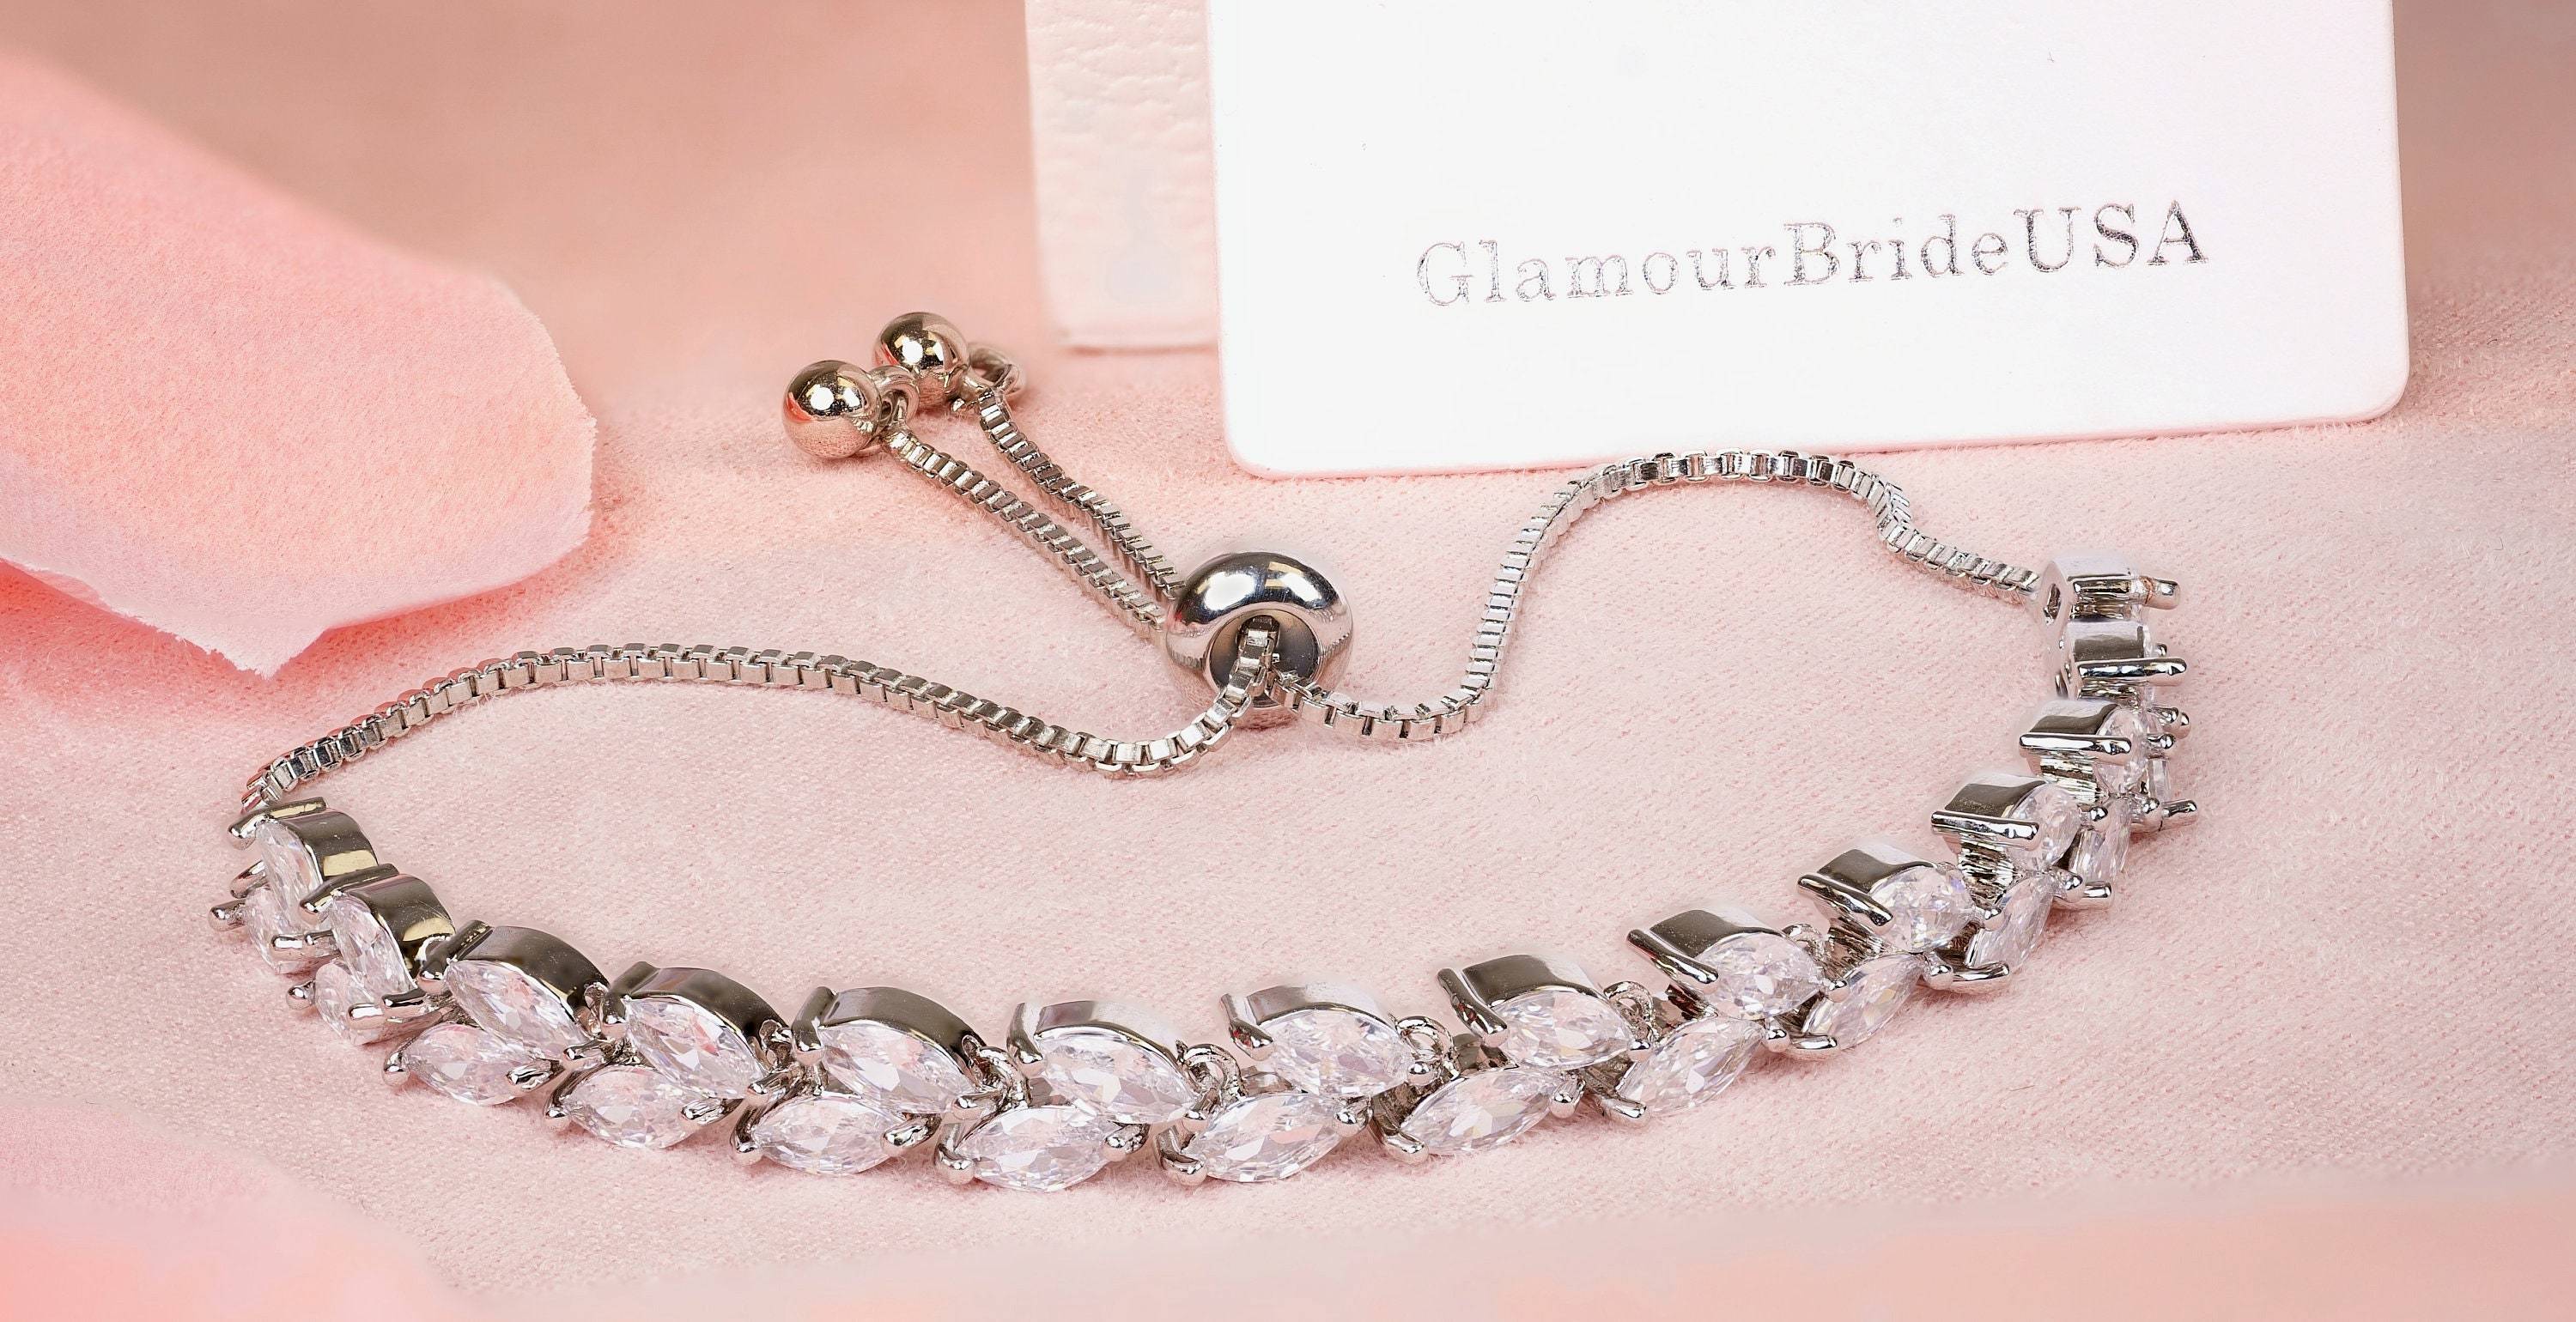 Brittney - Crystal Bridal Earrings Big